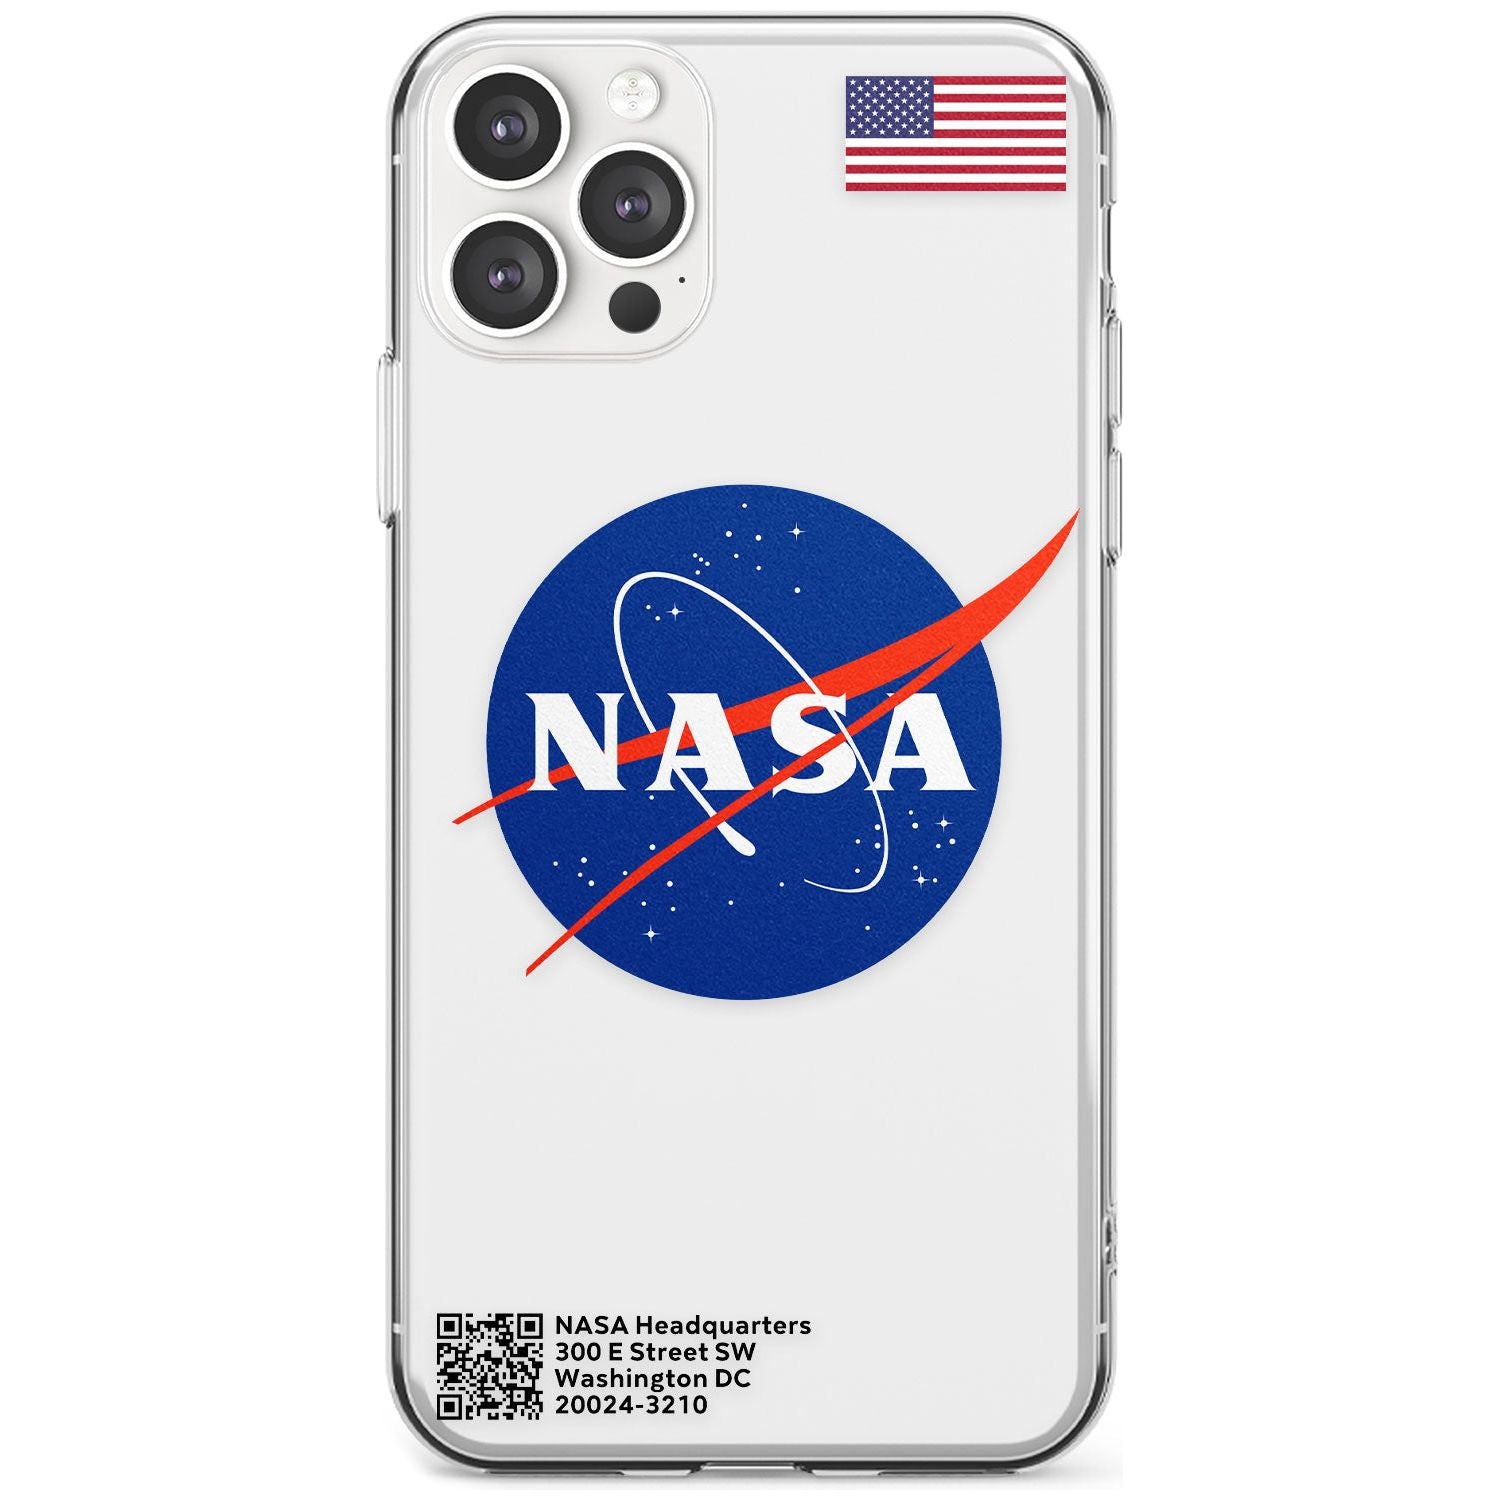 NASA Meatball Slim TPU Phone Case for iPhone 11 Pro Max